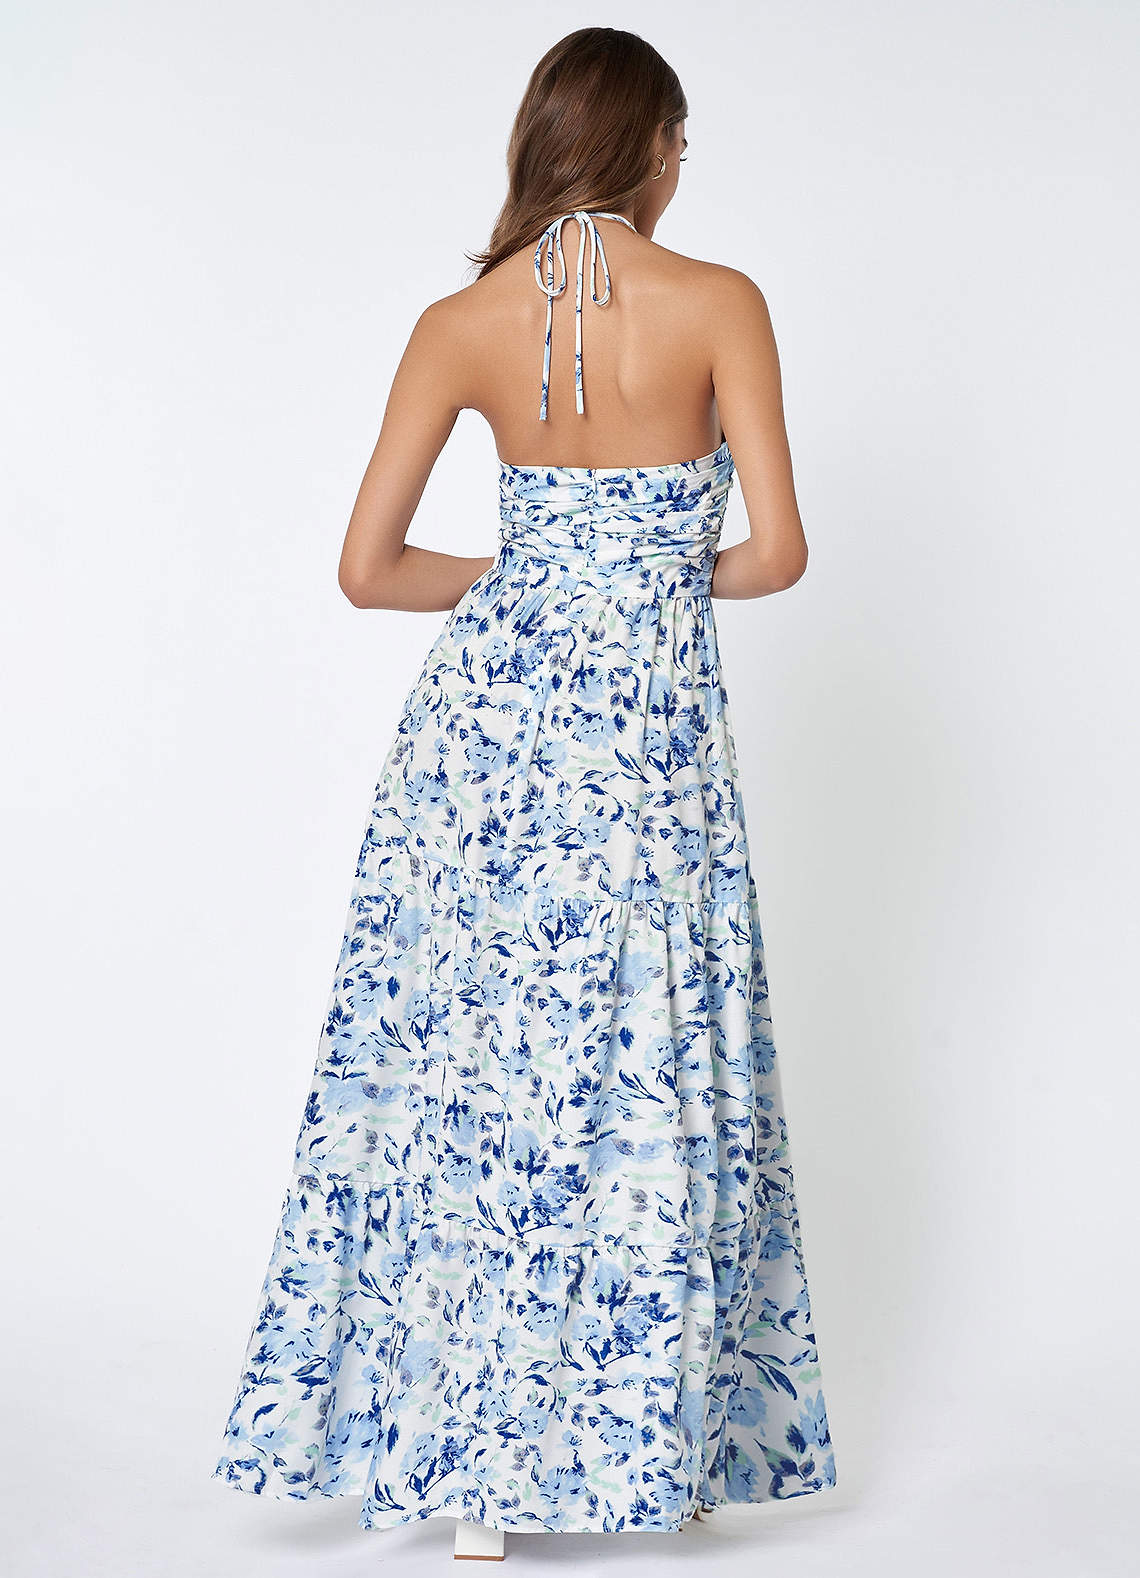 BEEYASO Clearance Summer Dresses for Women Sleeveless Floral Leisure  Asymmetrical A-Line Halter Dress Blue L 